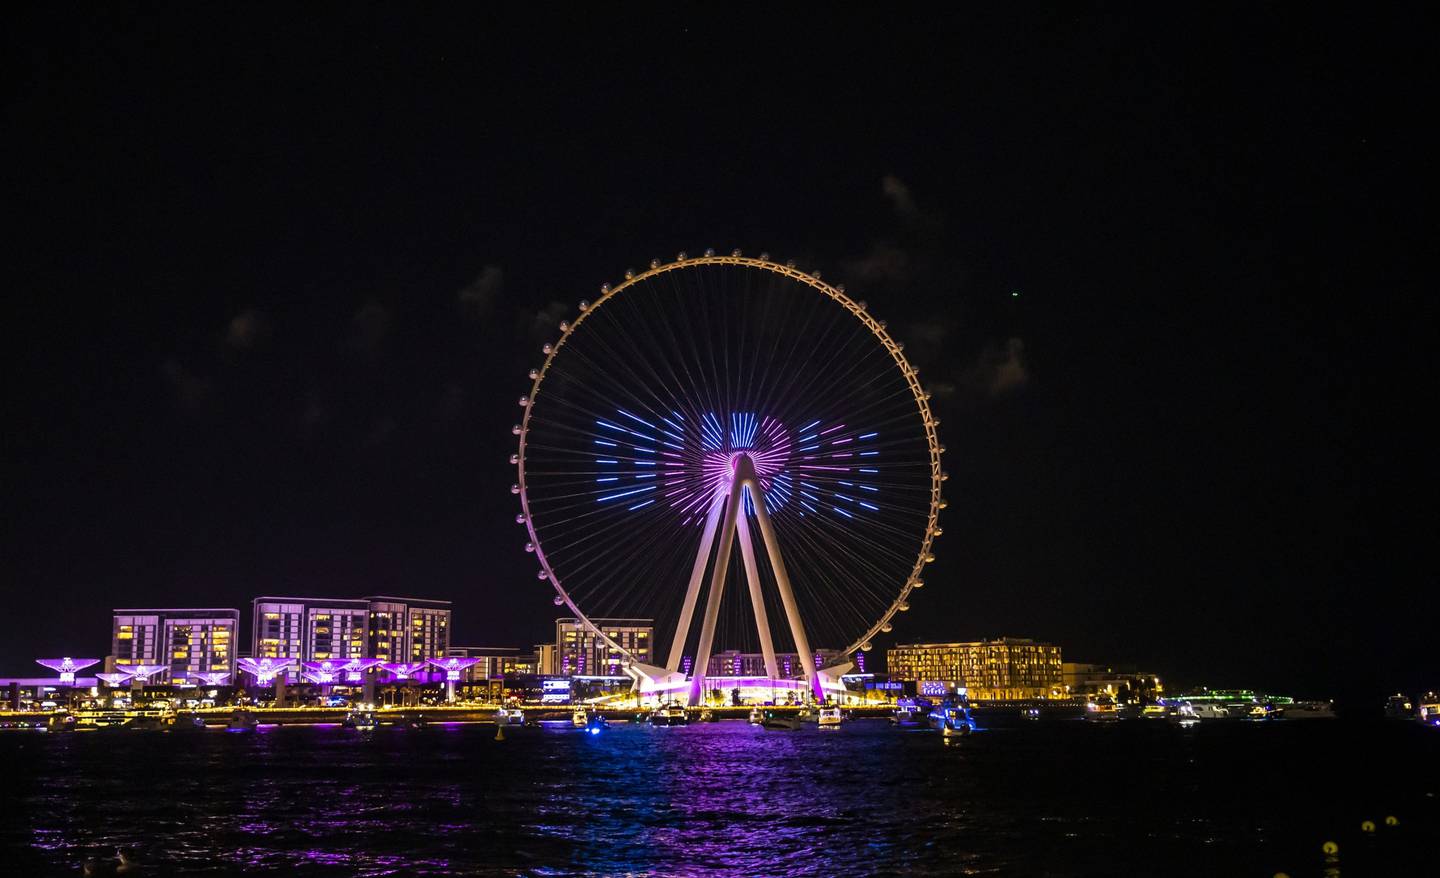 Ain Dubai opened with a spectacular light show